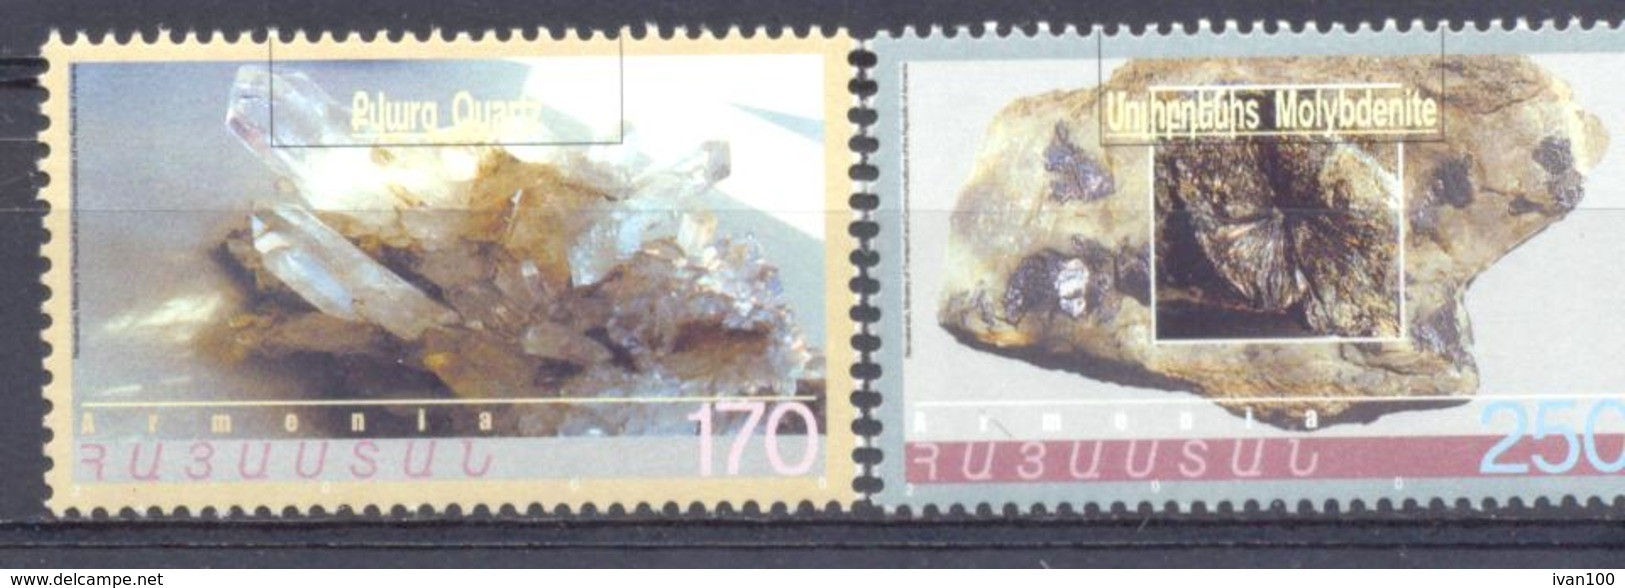 2000. Armenia, Minelars, 2v, Mint/** - Armenia